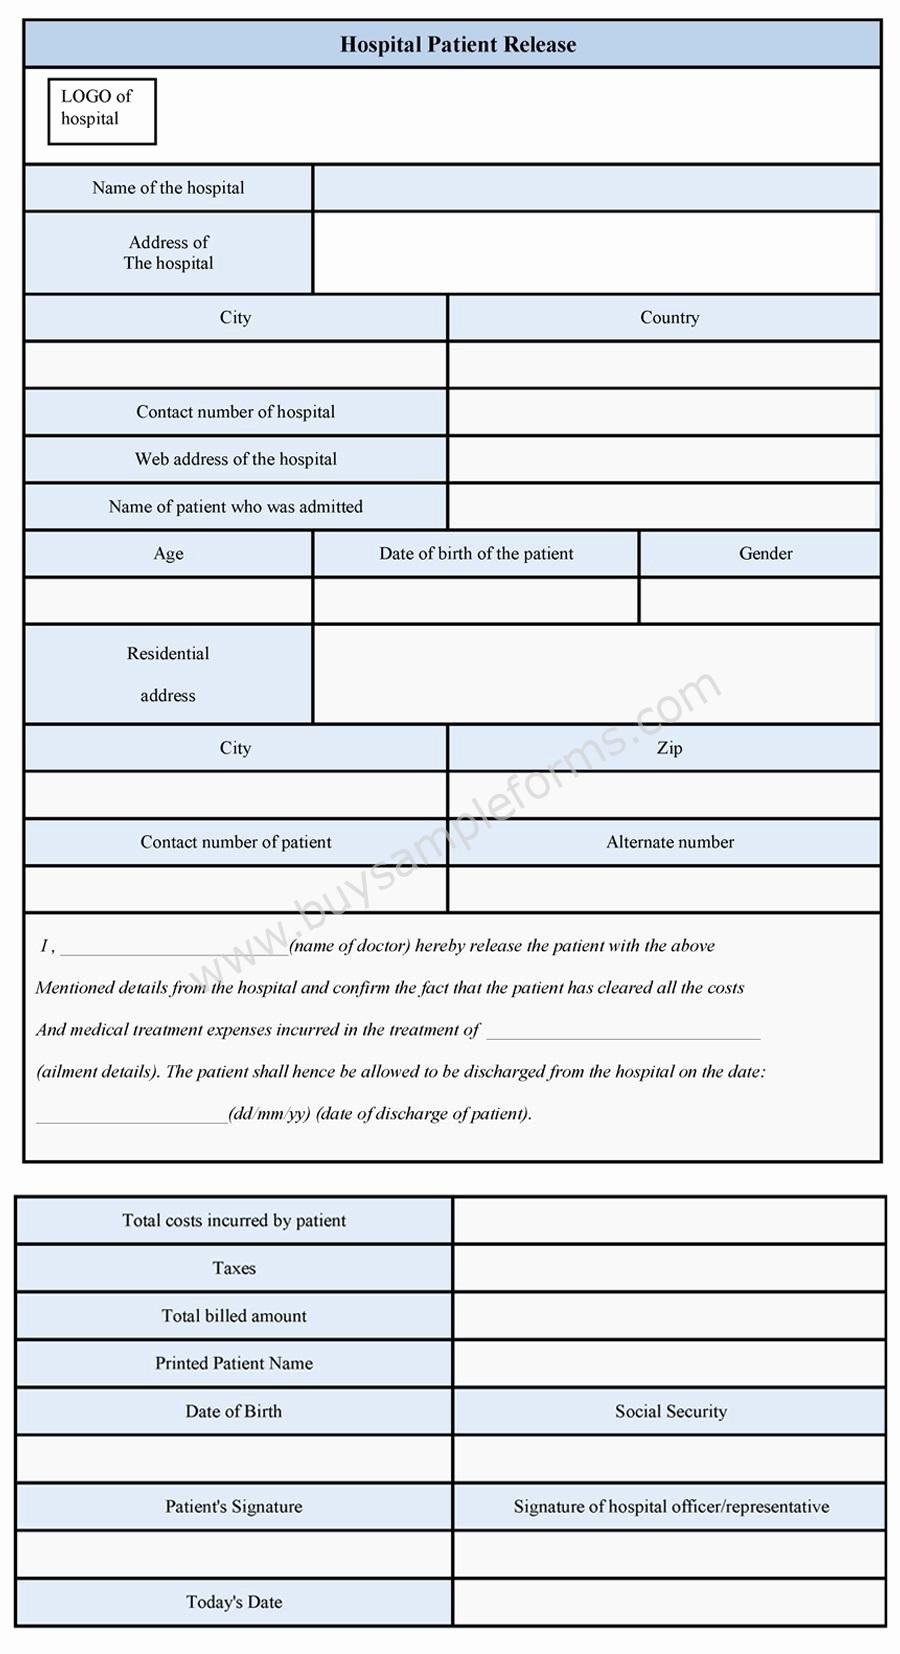 Hospital Discharge form Template Inspirational Hospital Patient Release form Sample forms